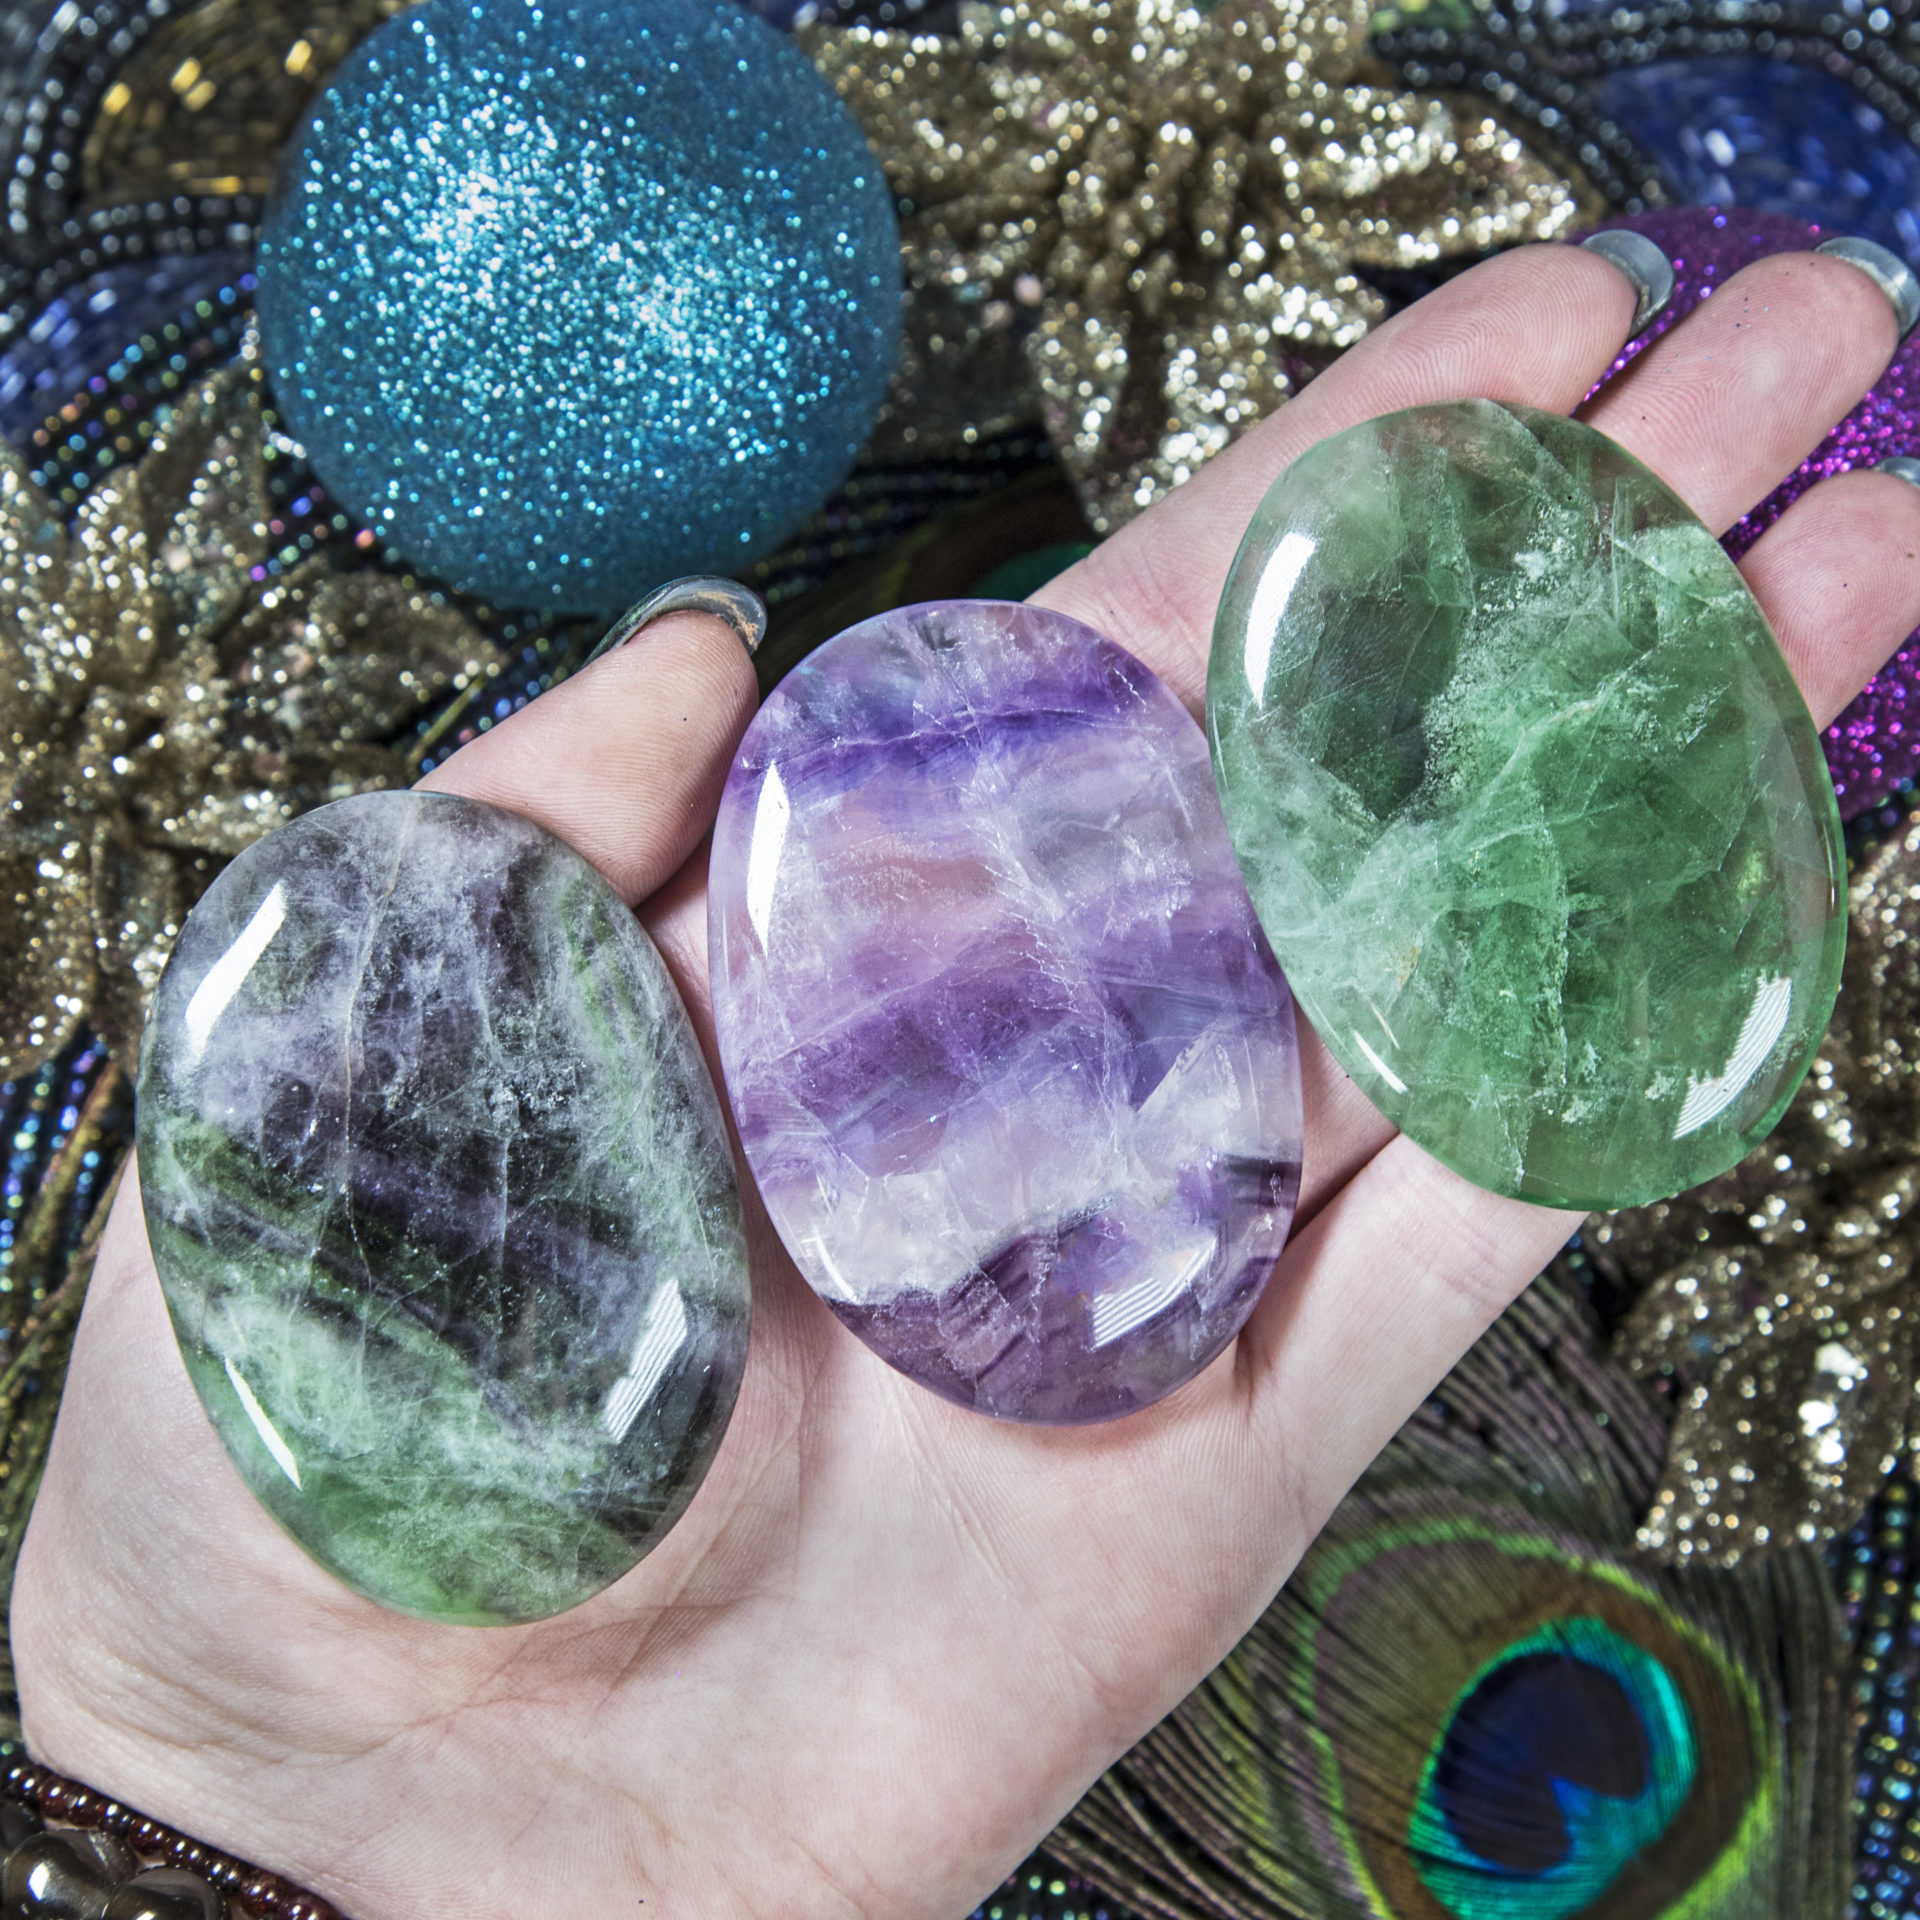 Details about   1pcs Natural Rainbow Fluorite Palmstone Crystal Quartz Healing Polished Stones